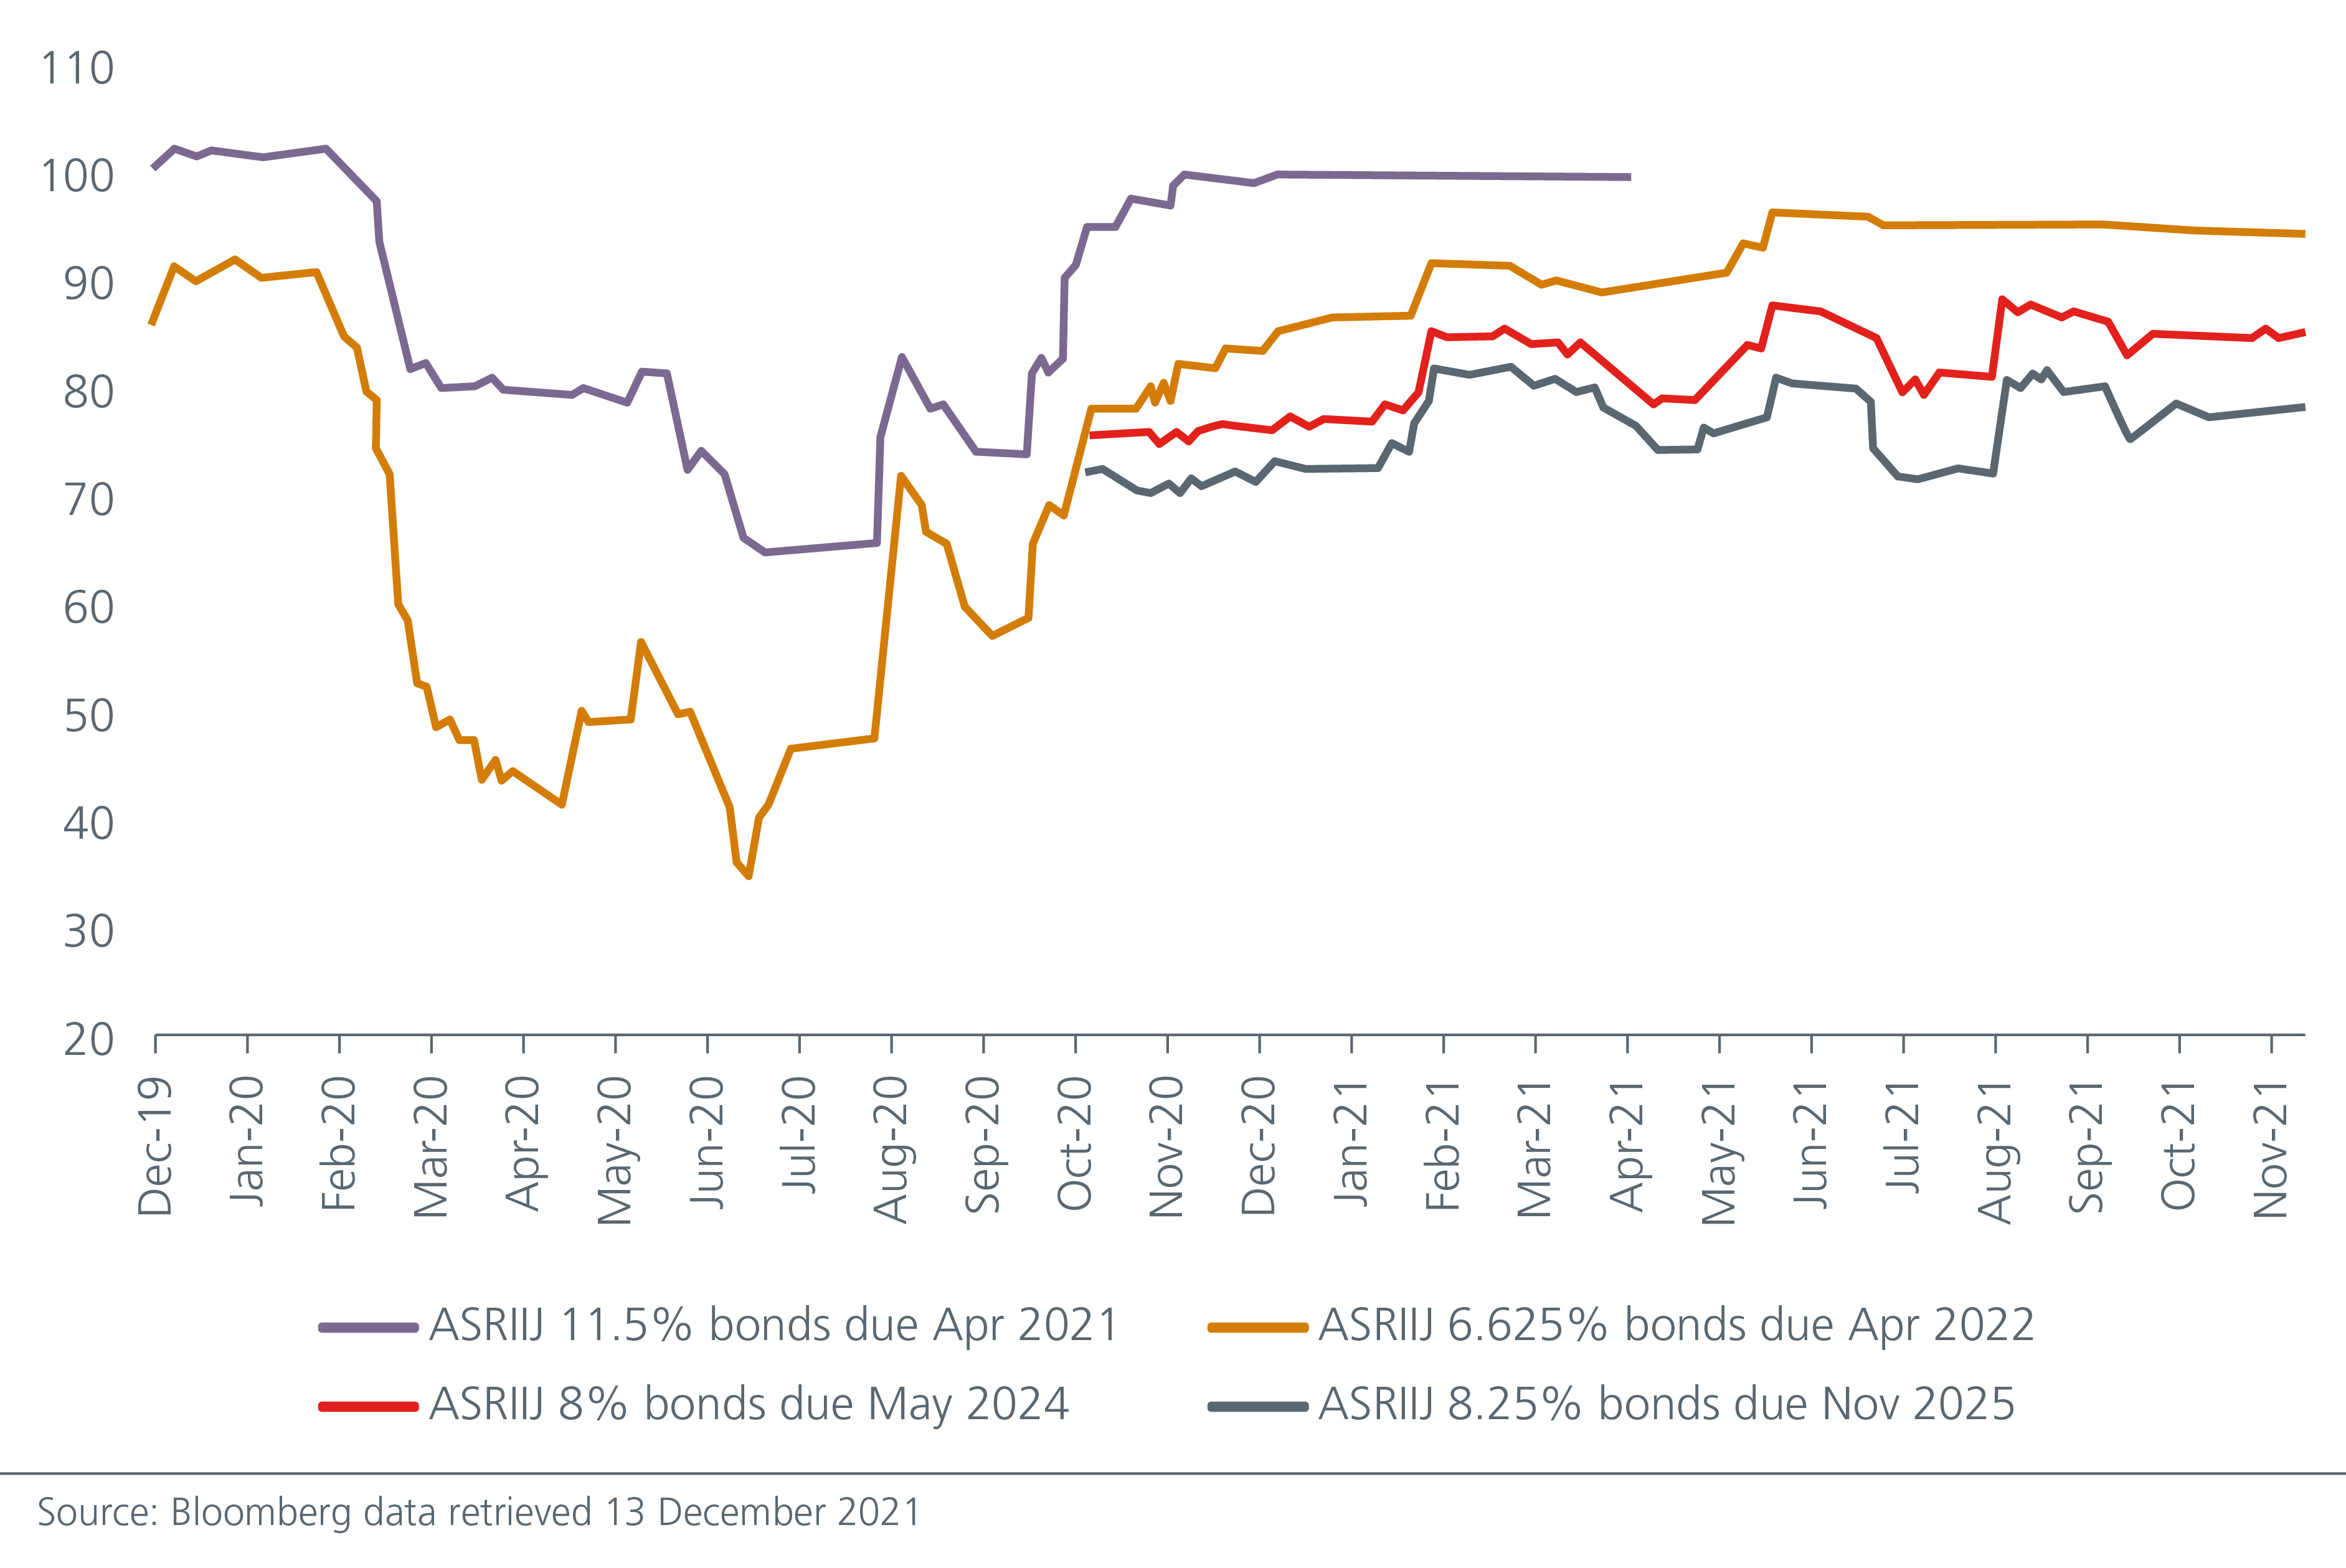 Alam Sutera bond prices rebound on easing refinancing risks